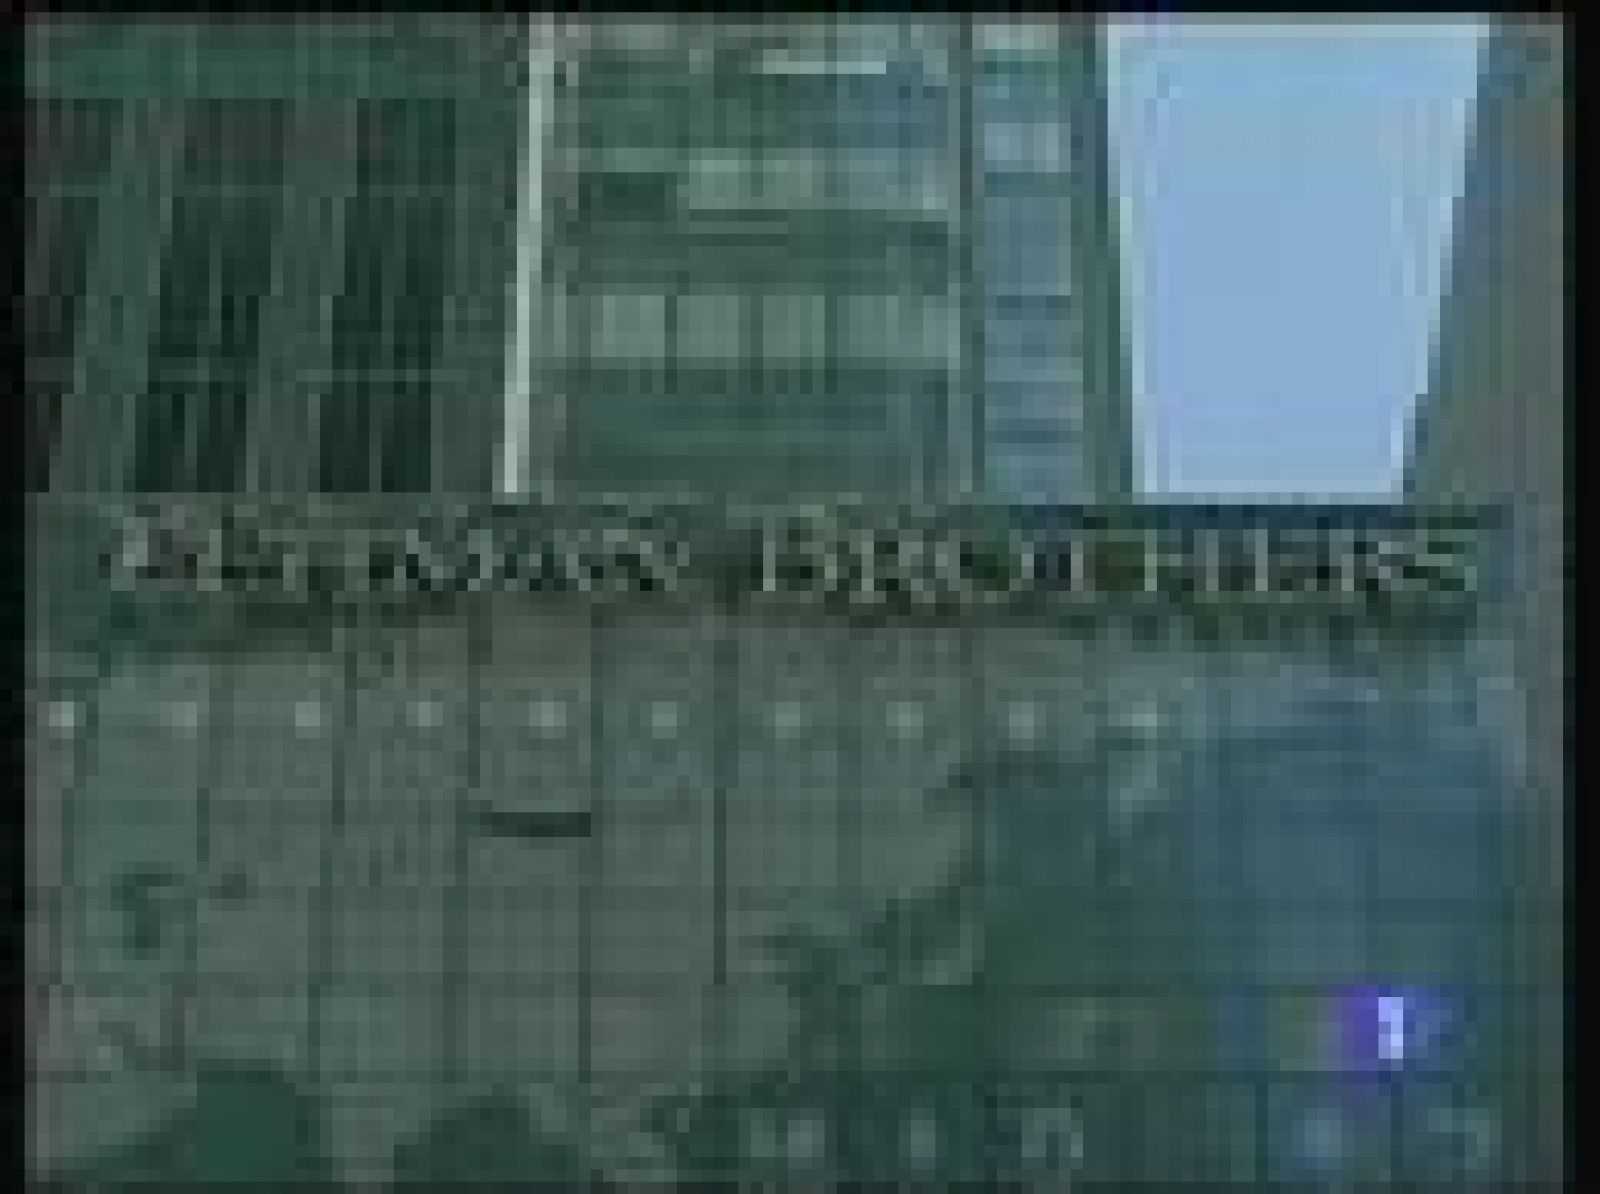  La quiebra de Lehman Brothers hunde las bolsas europeas